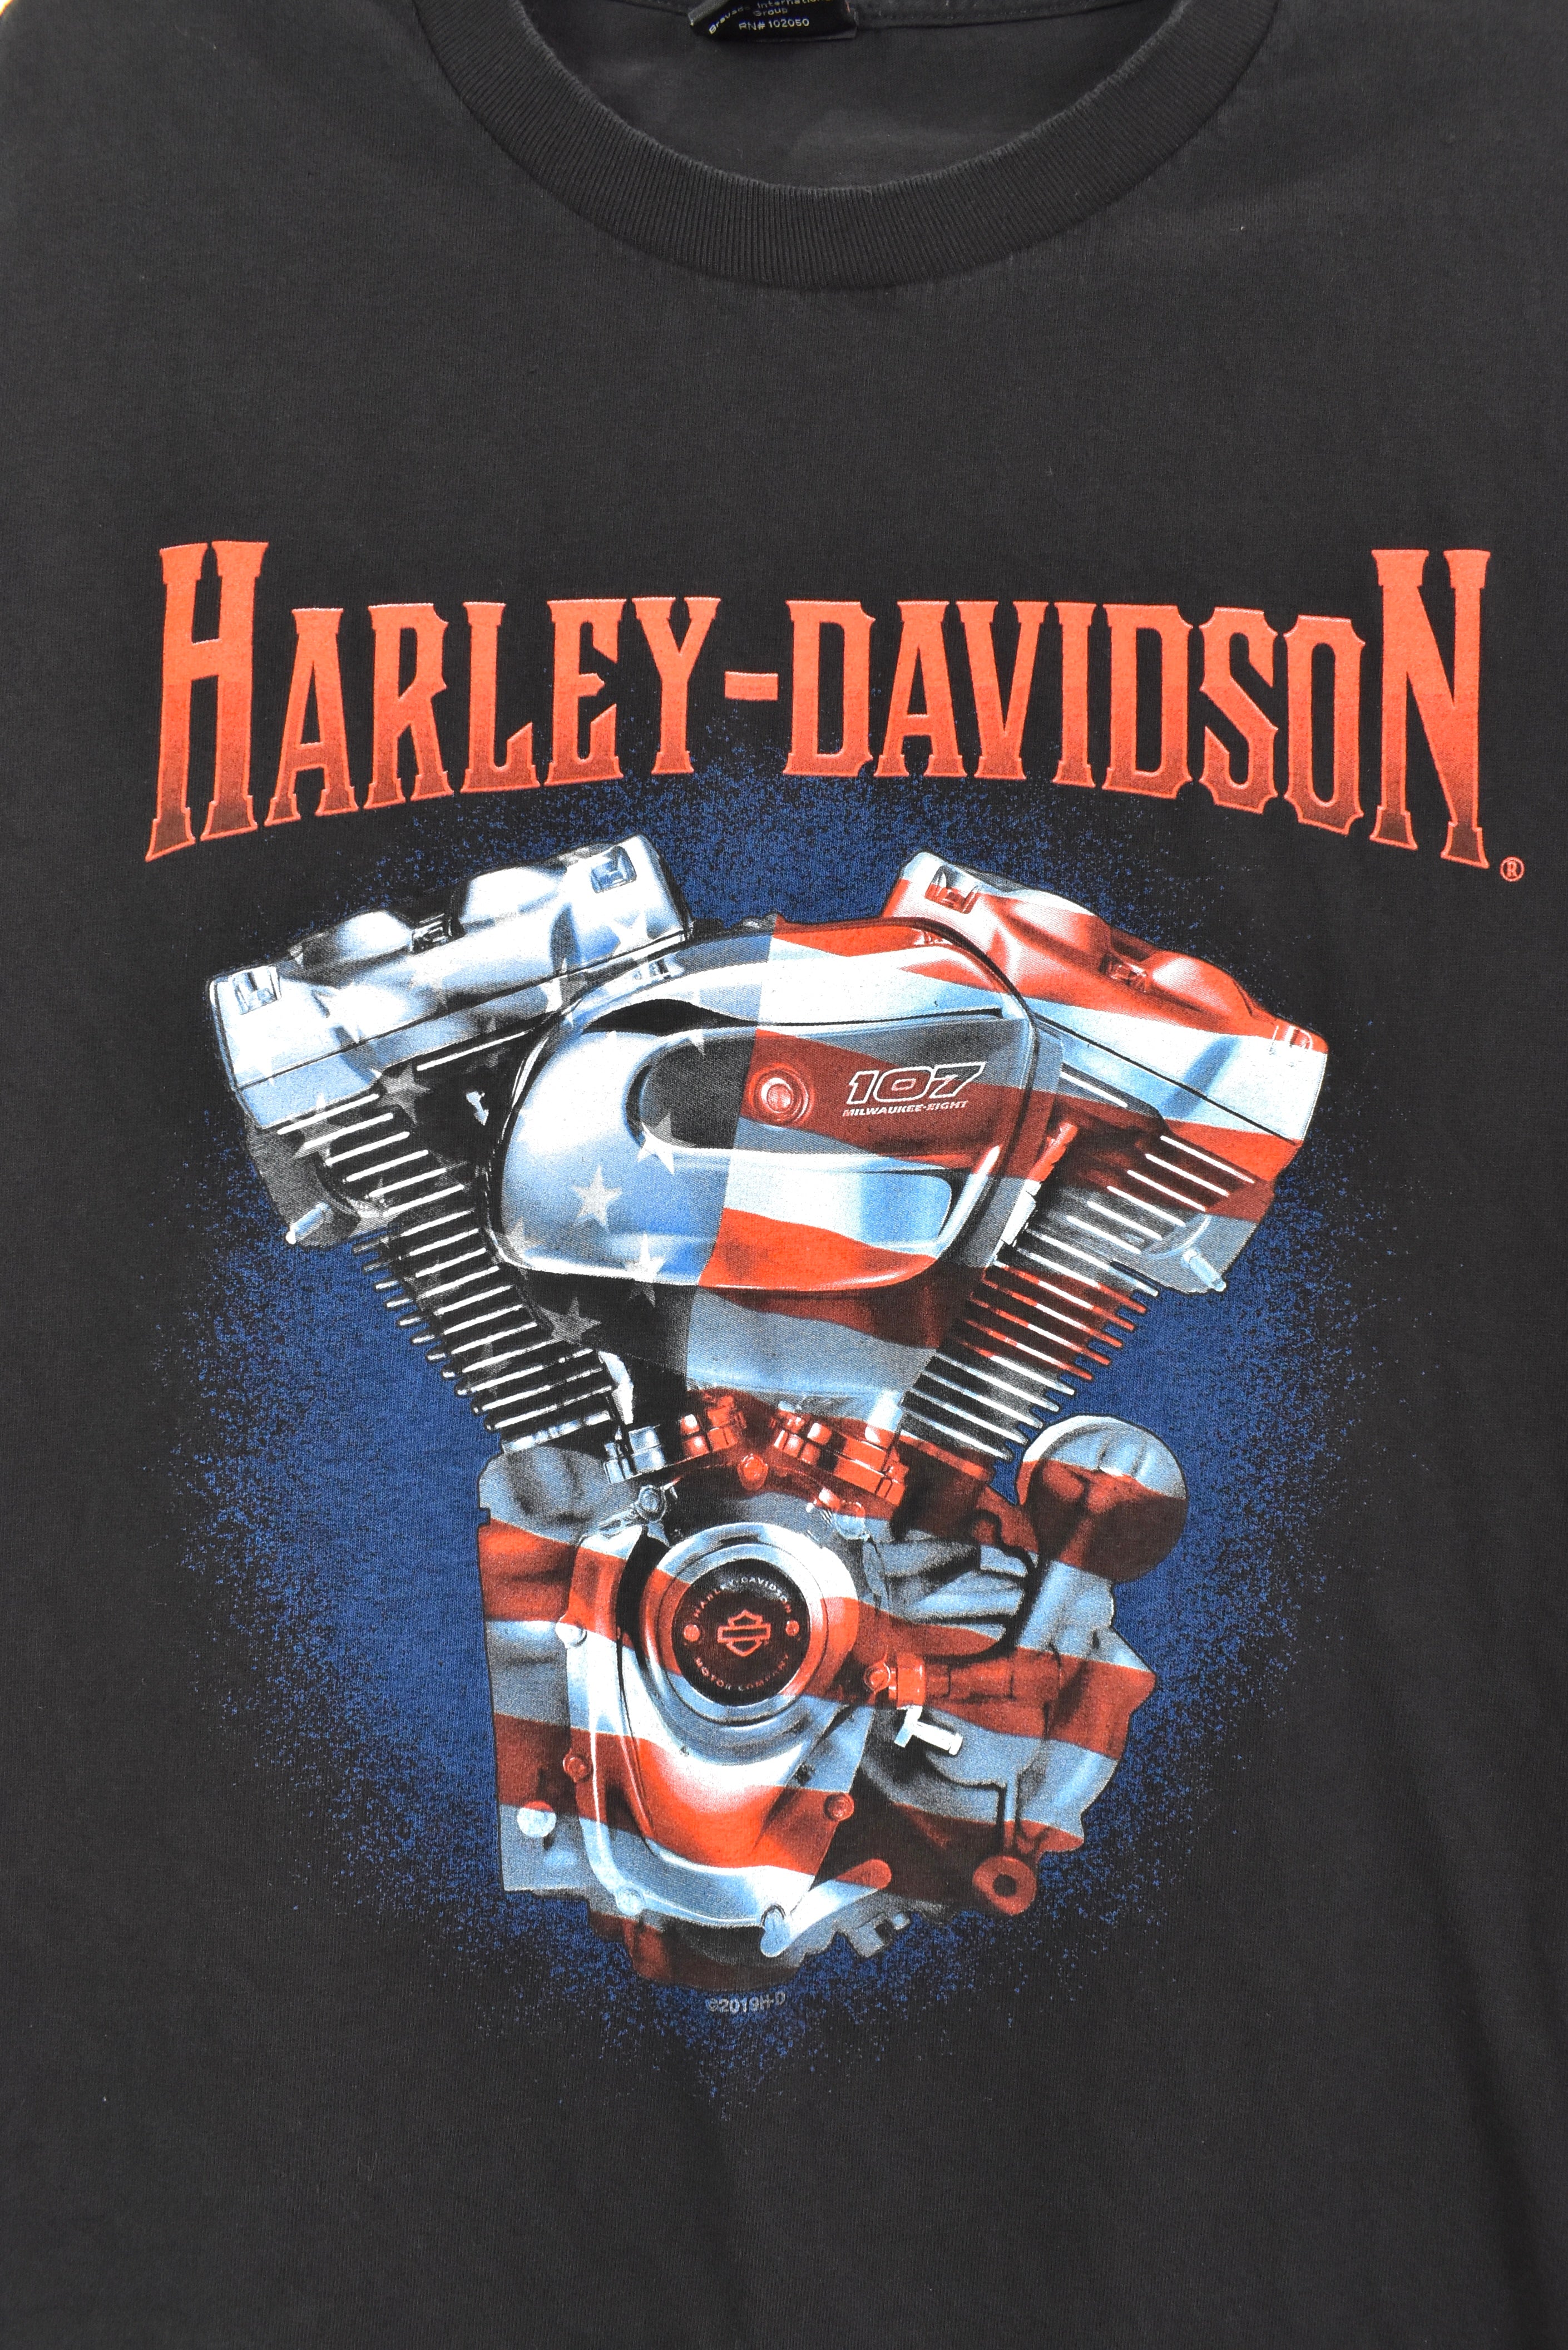 Modern Harley Davidson shirt, motorcycle biker tee - XXXL, black HARLEY DAVIDSON